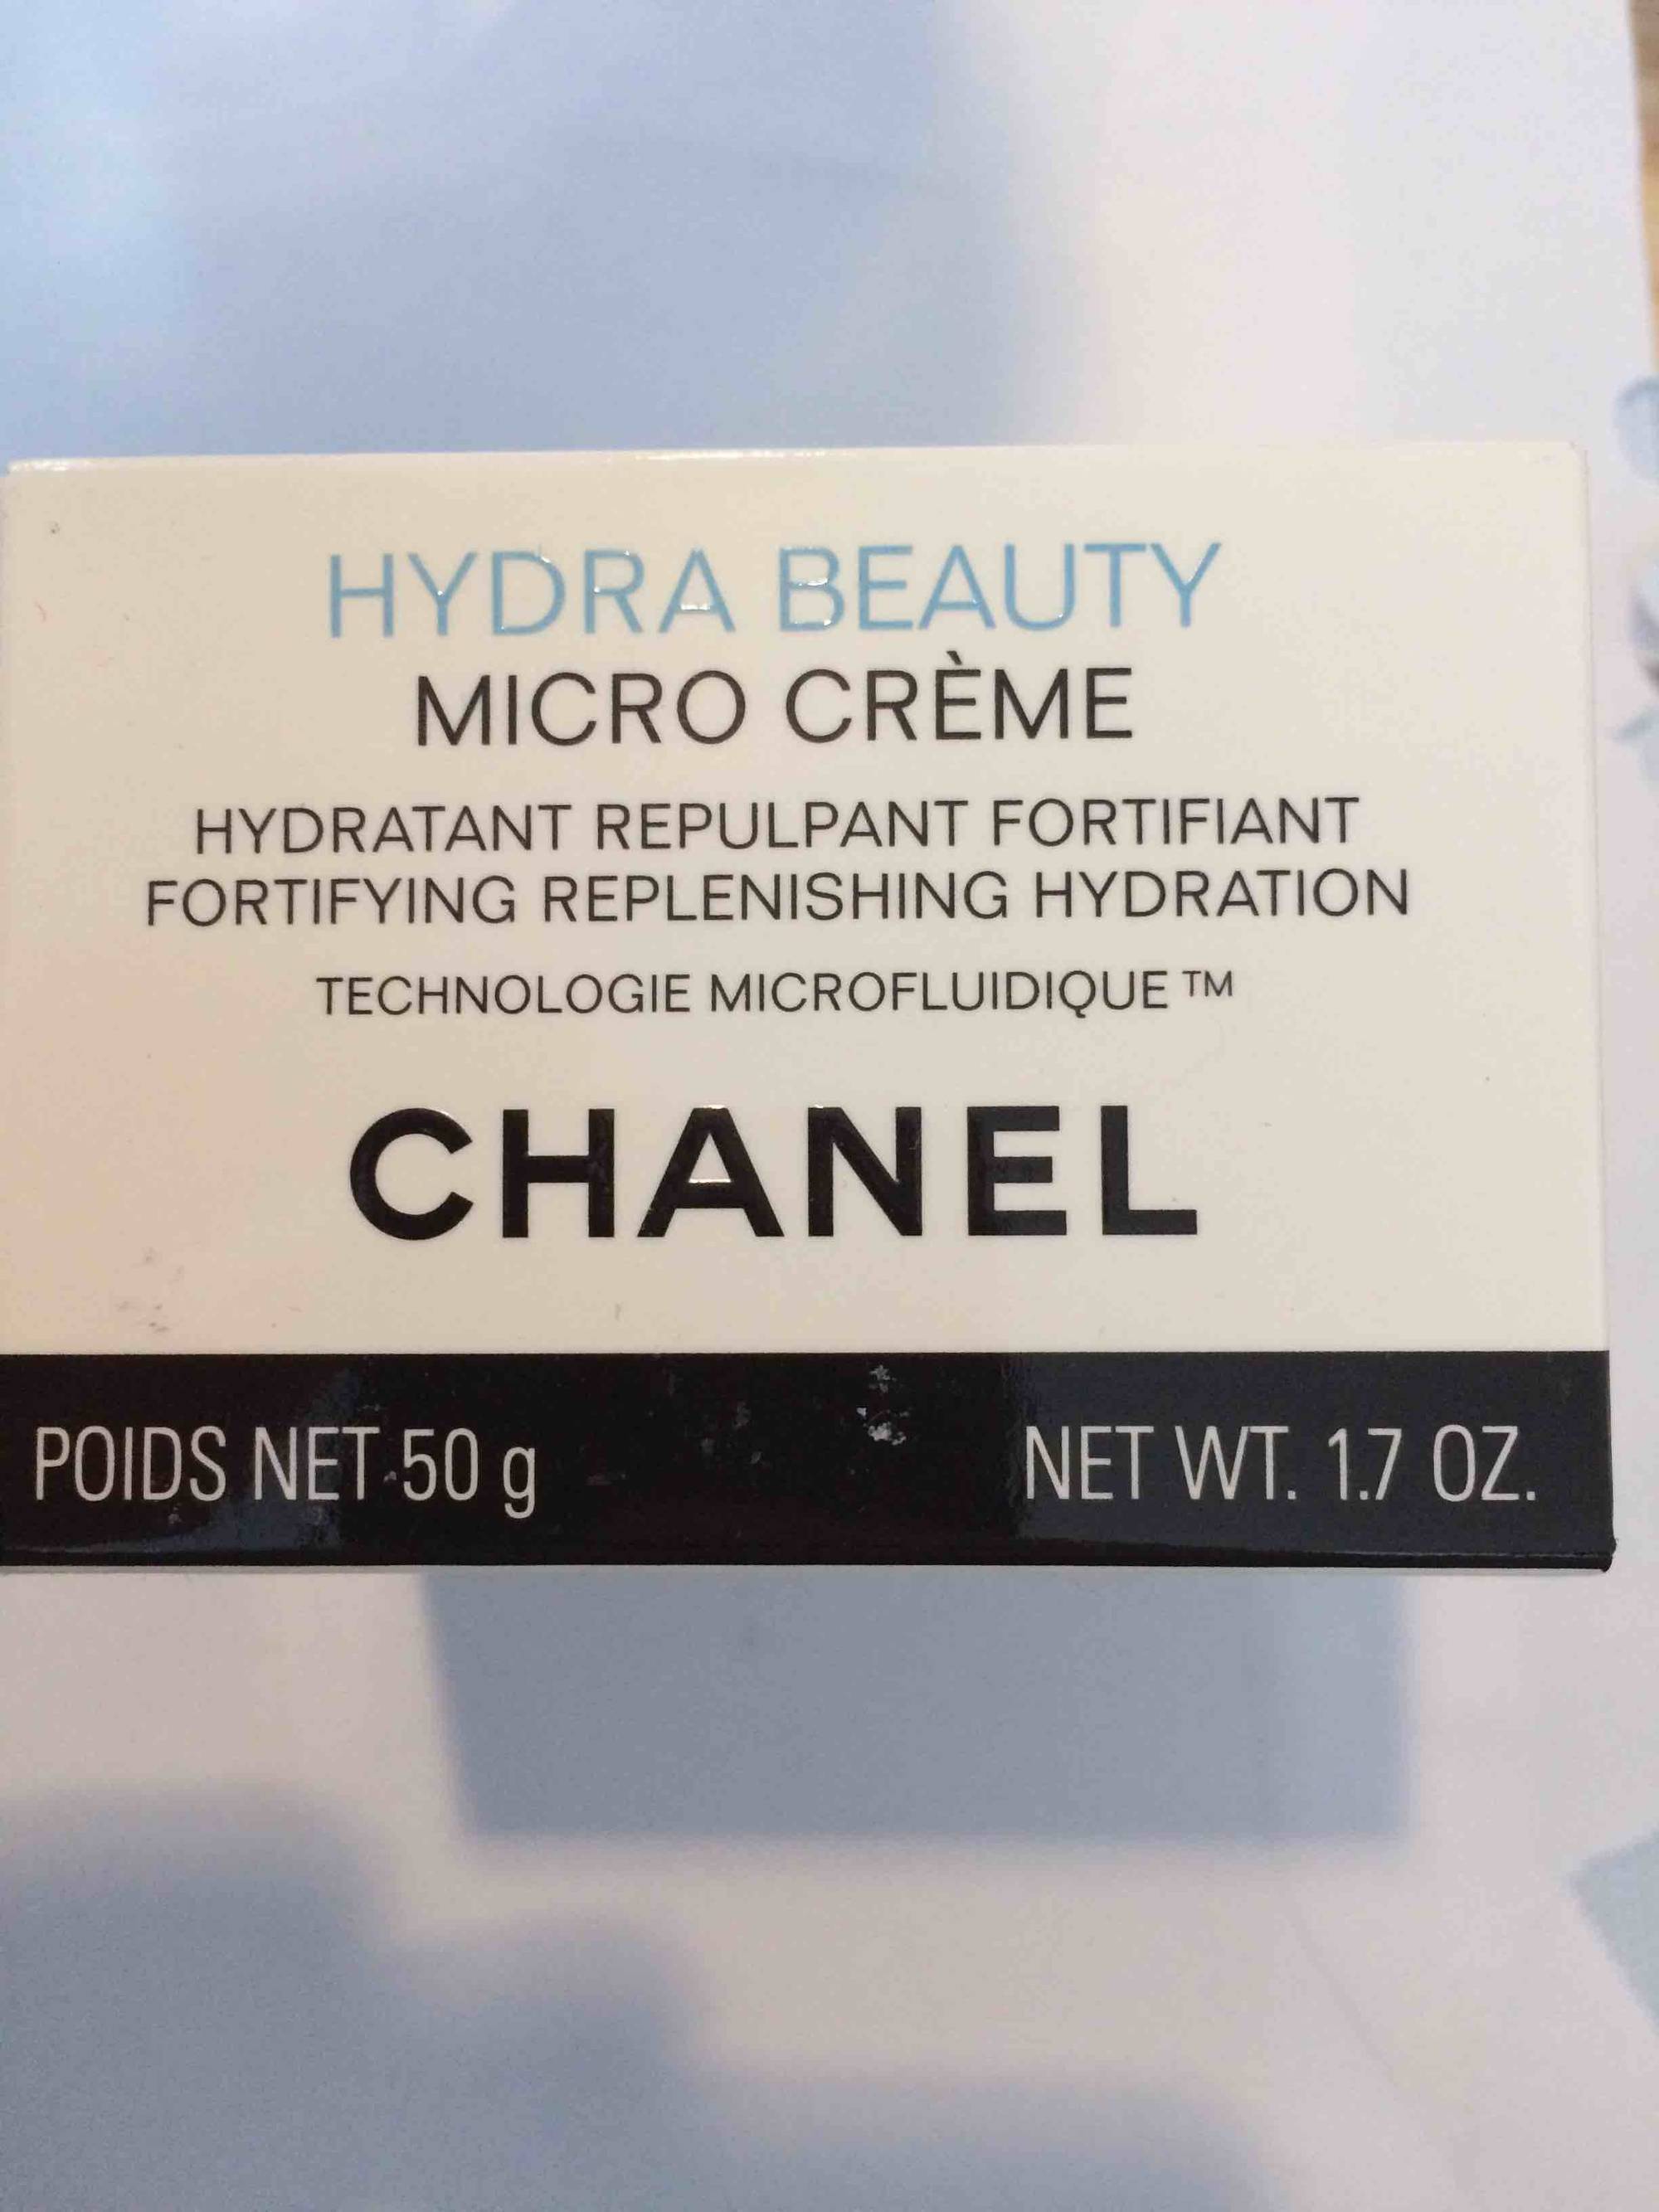 CHANEL - Hydra beauty - Micro crème